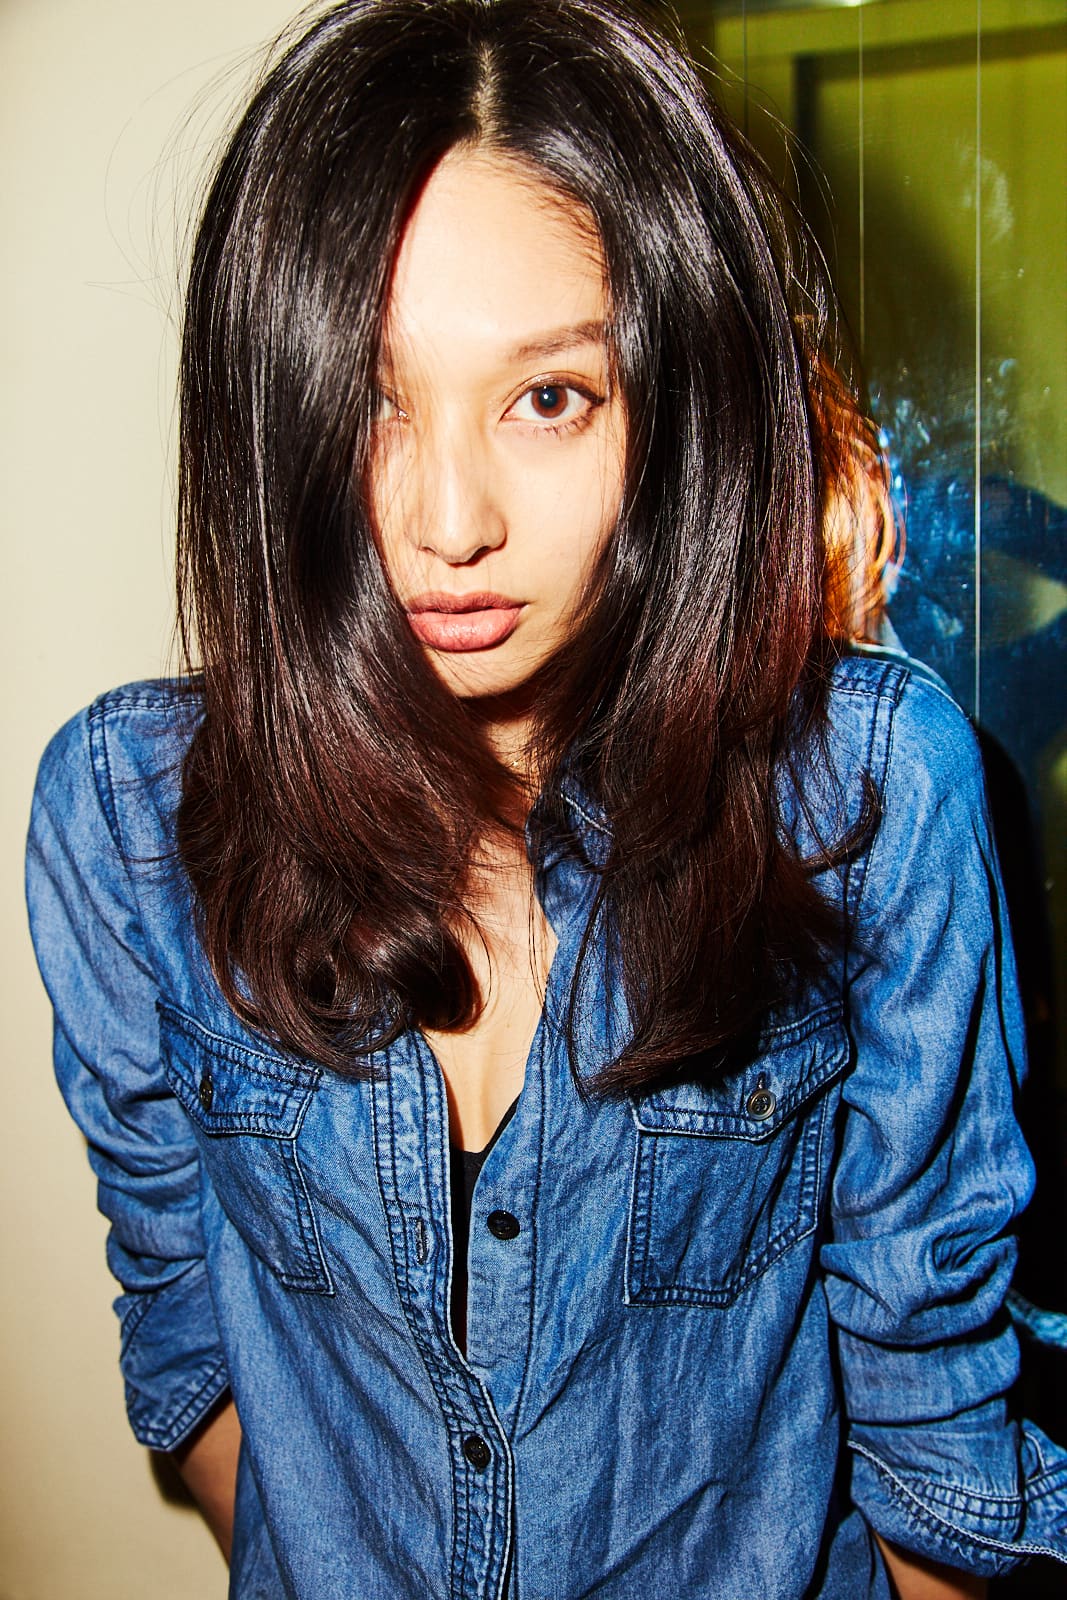 Nori Sato - Nextdoormodel Magazine